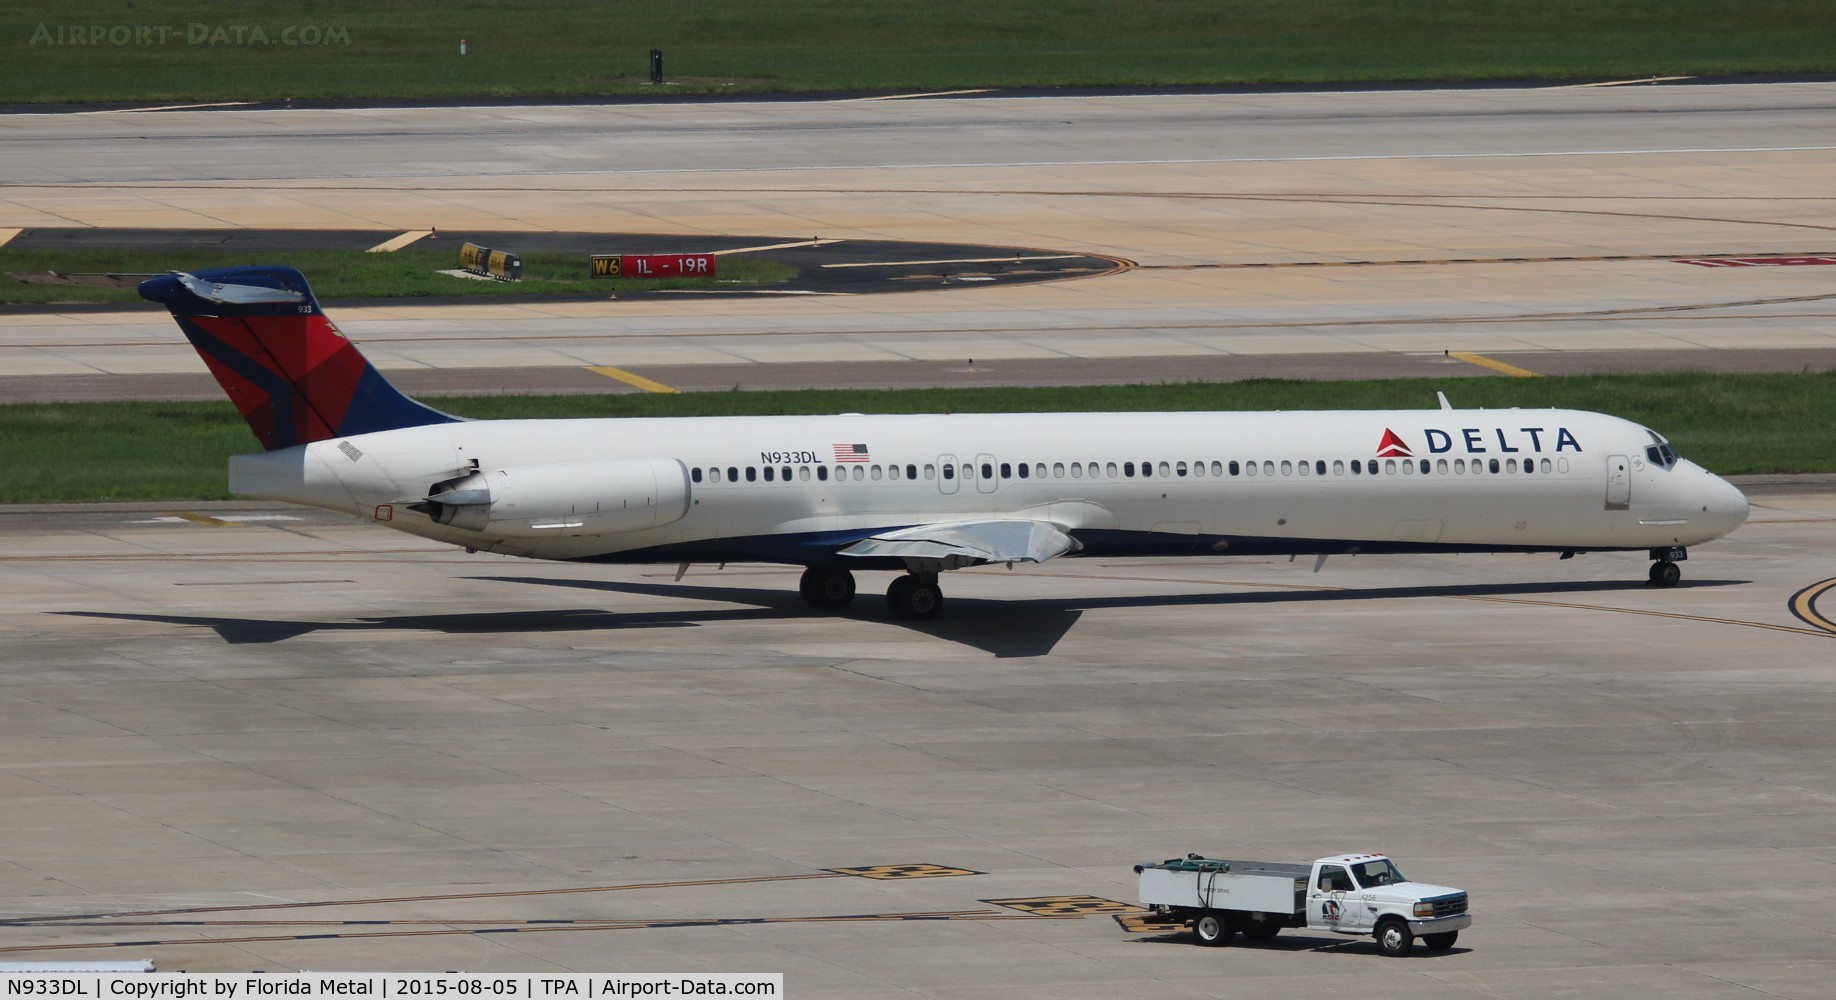 N933DL, 1989 McDonnell Douglas MD-88 C/N 49720, Delta